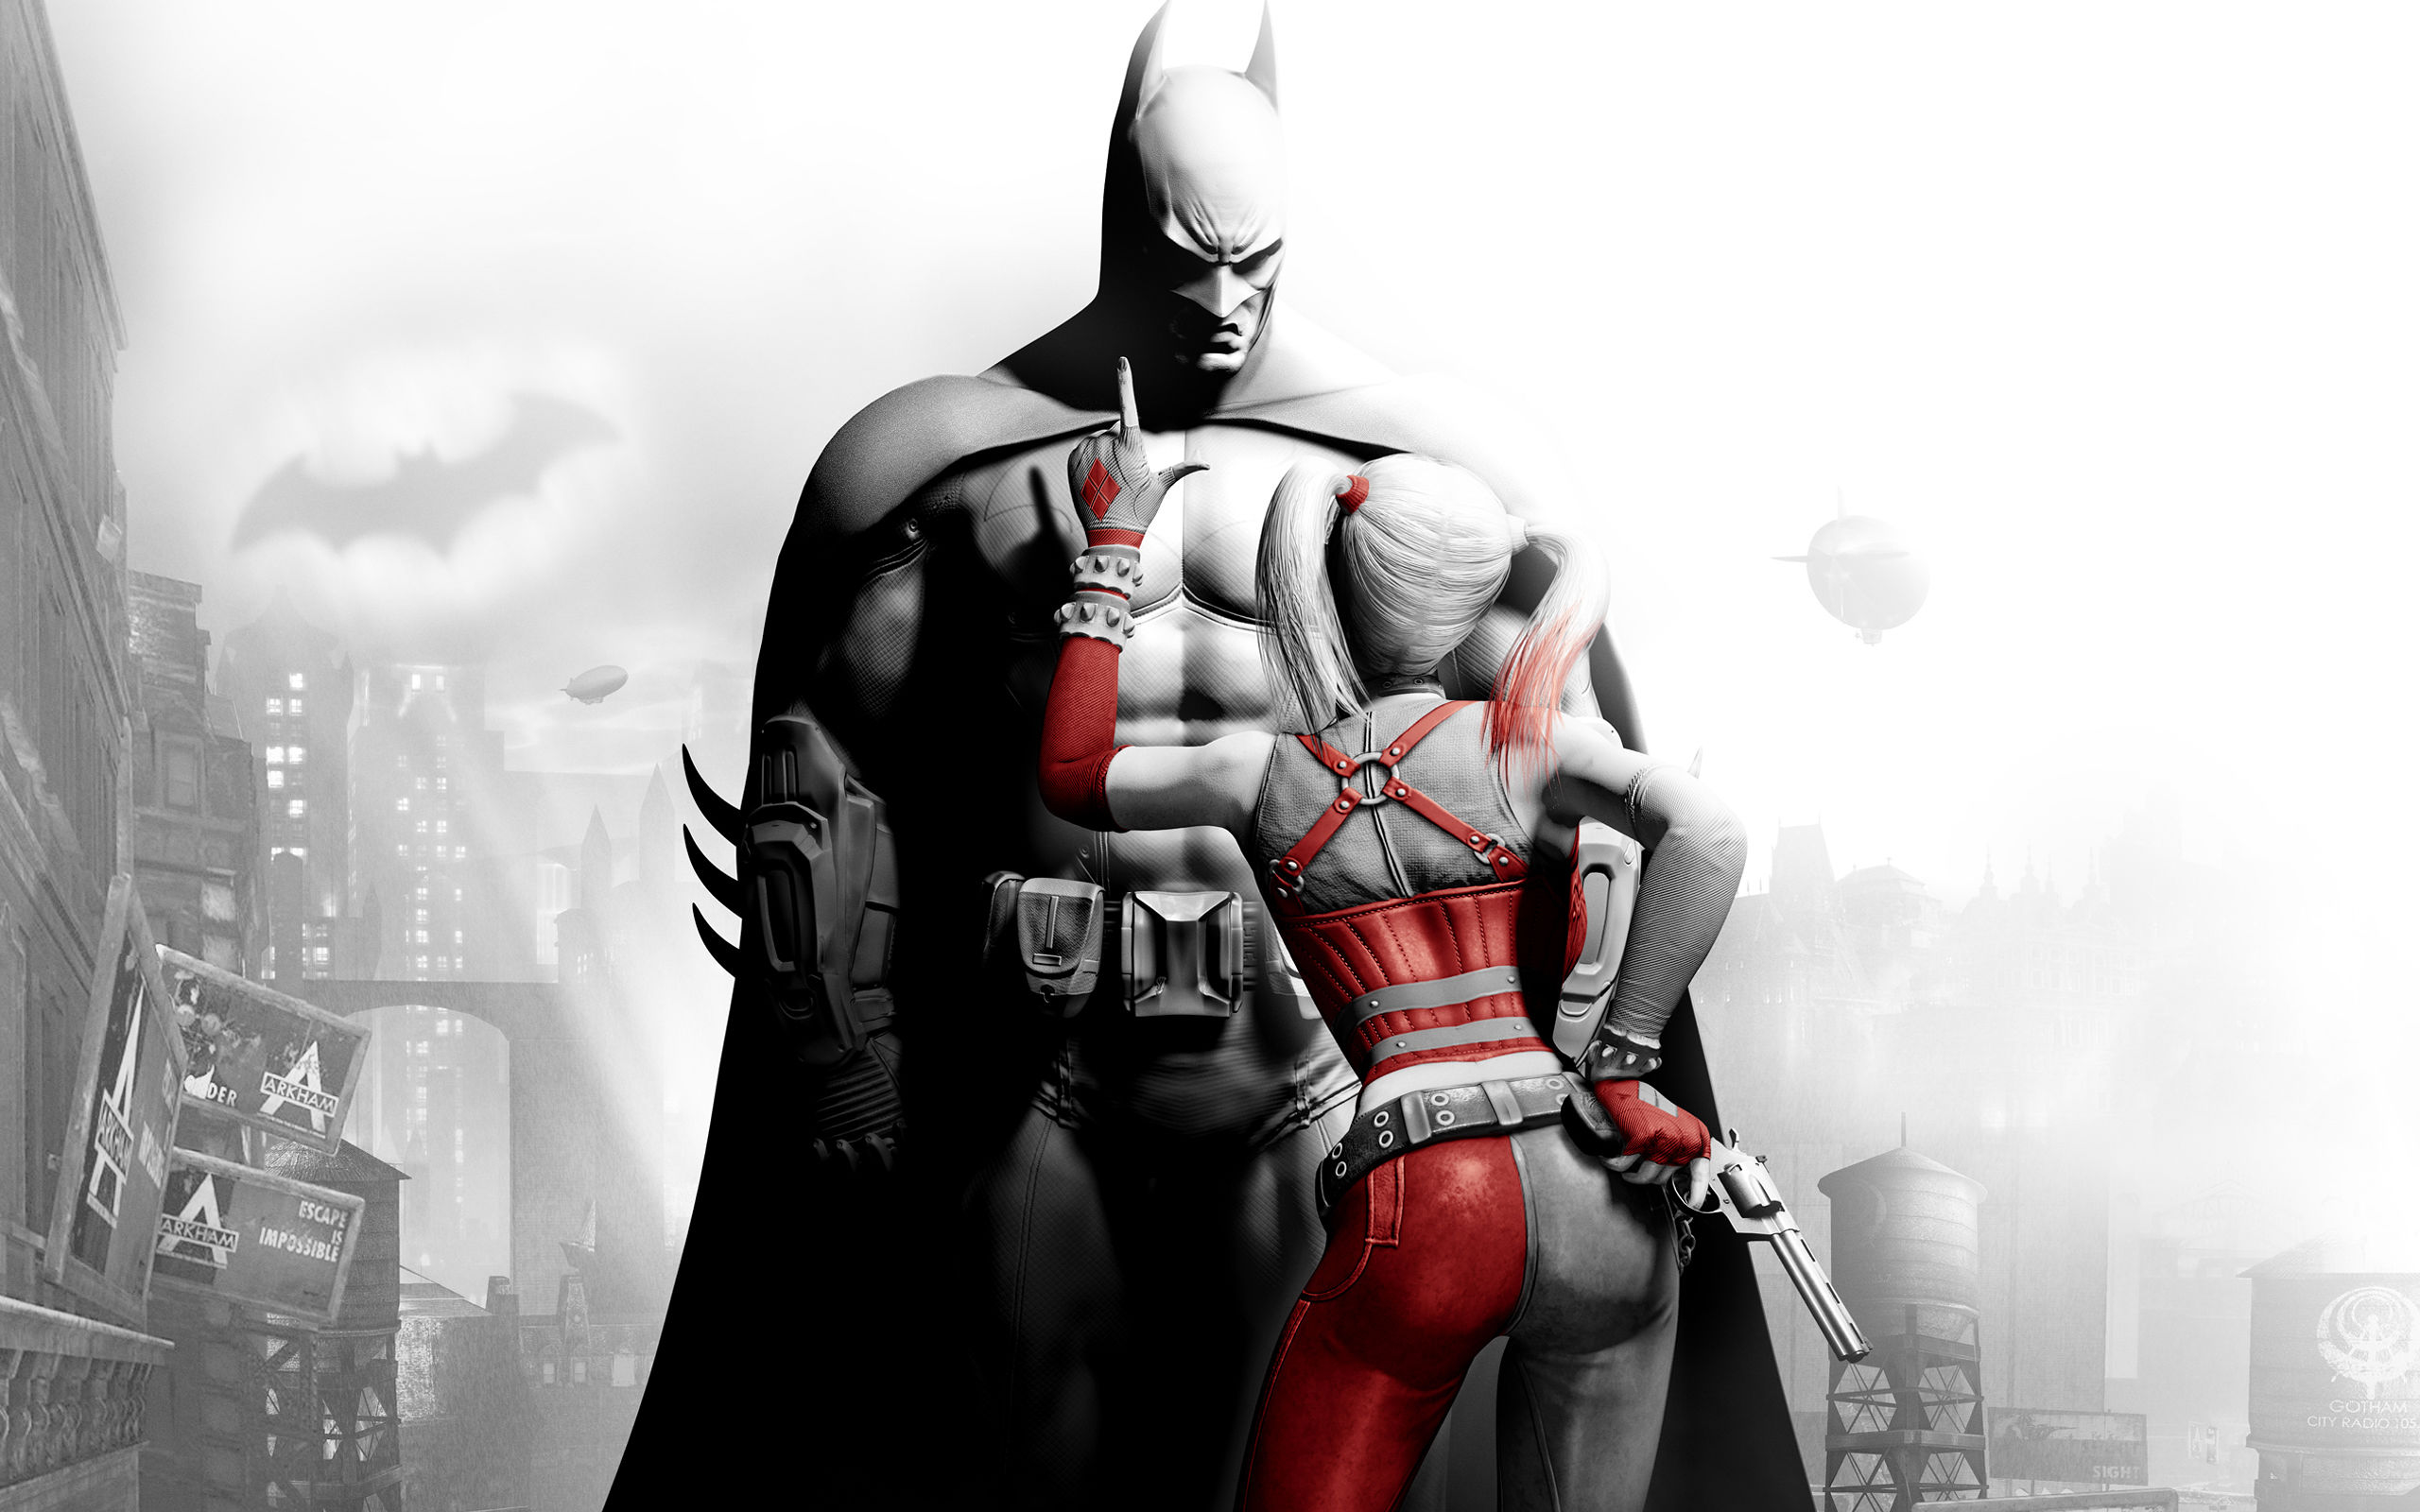 Batman: Arkham City - Armored Edition - Metacritic